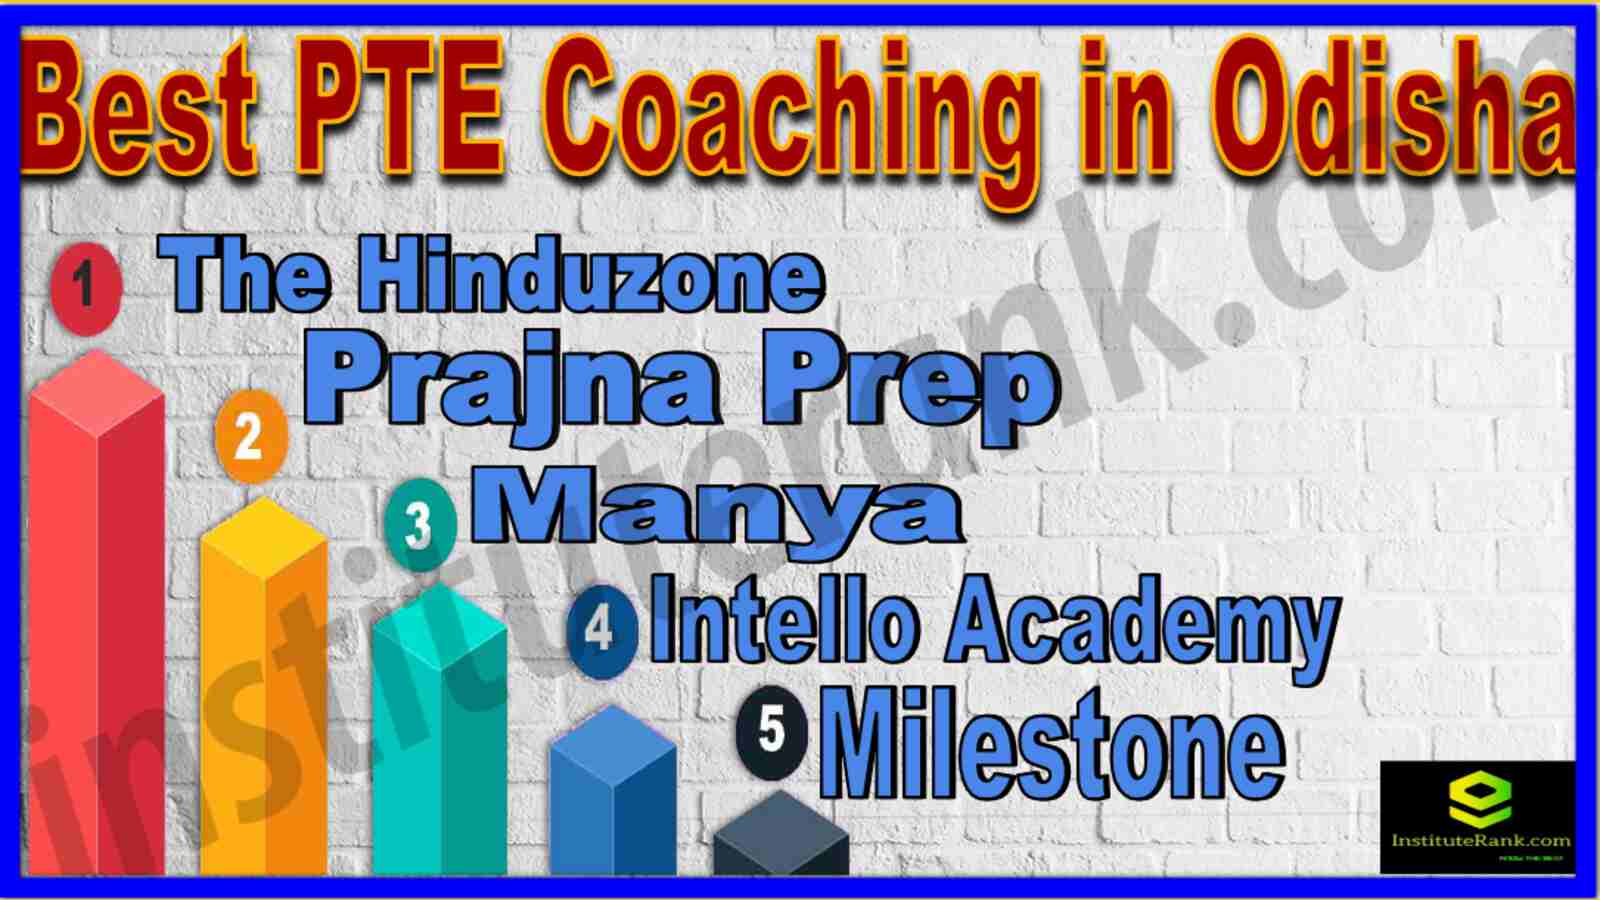 Best PTE Coaching in Odisha